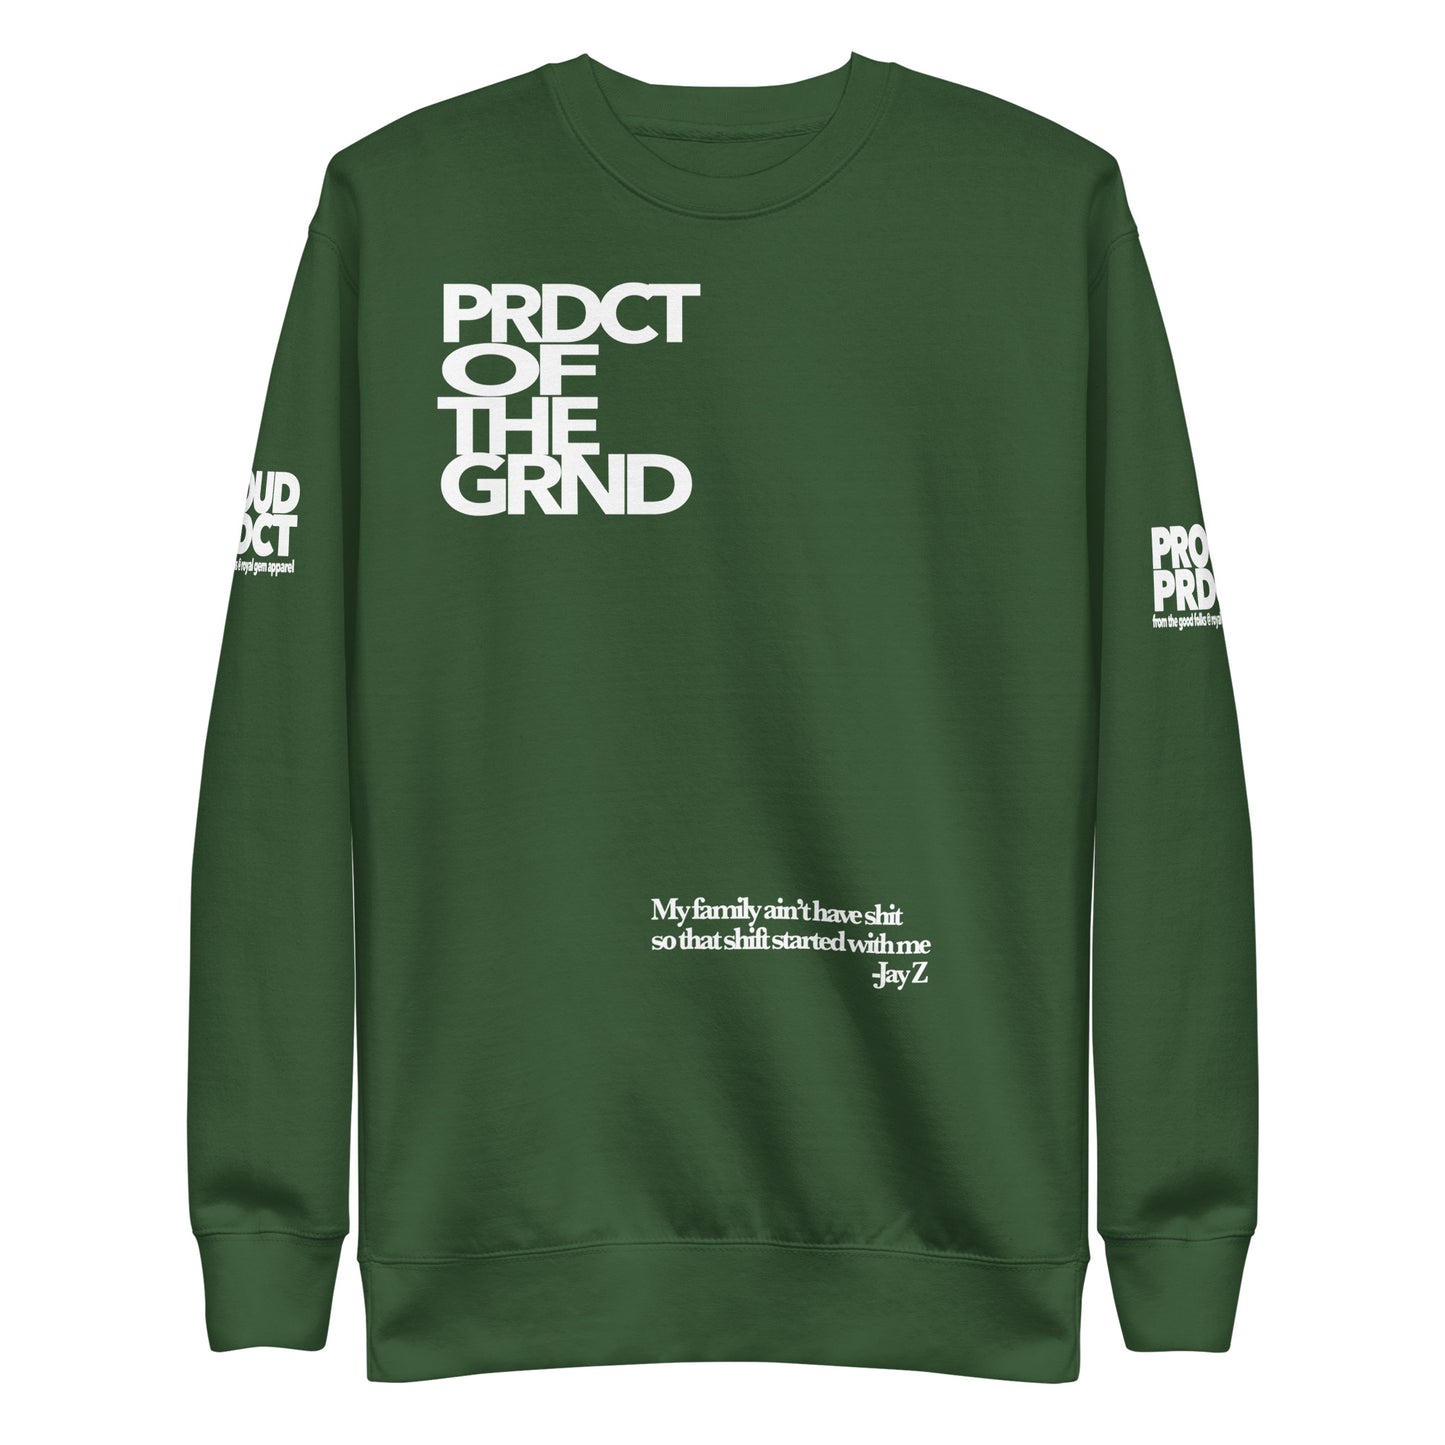 "Product of the Grind" Sweatshirt